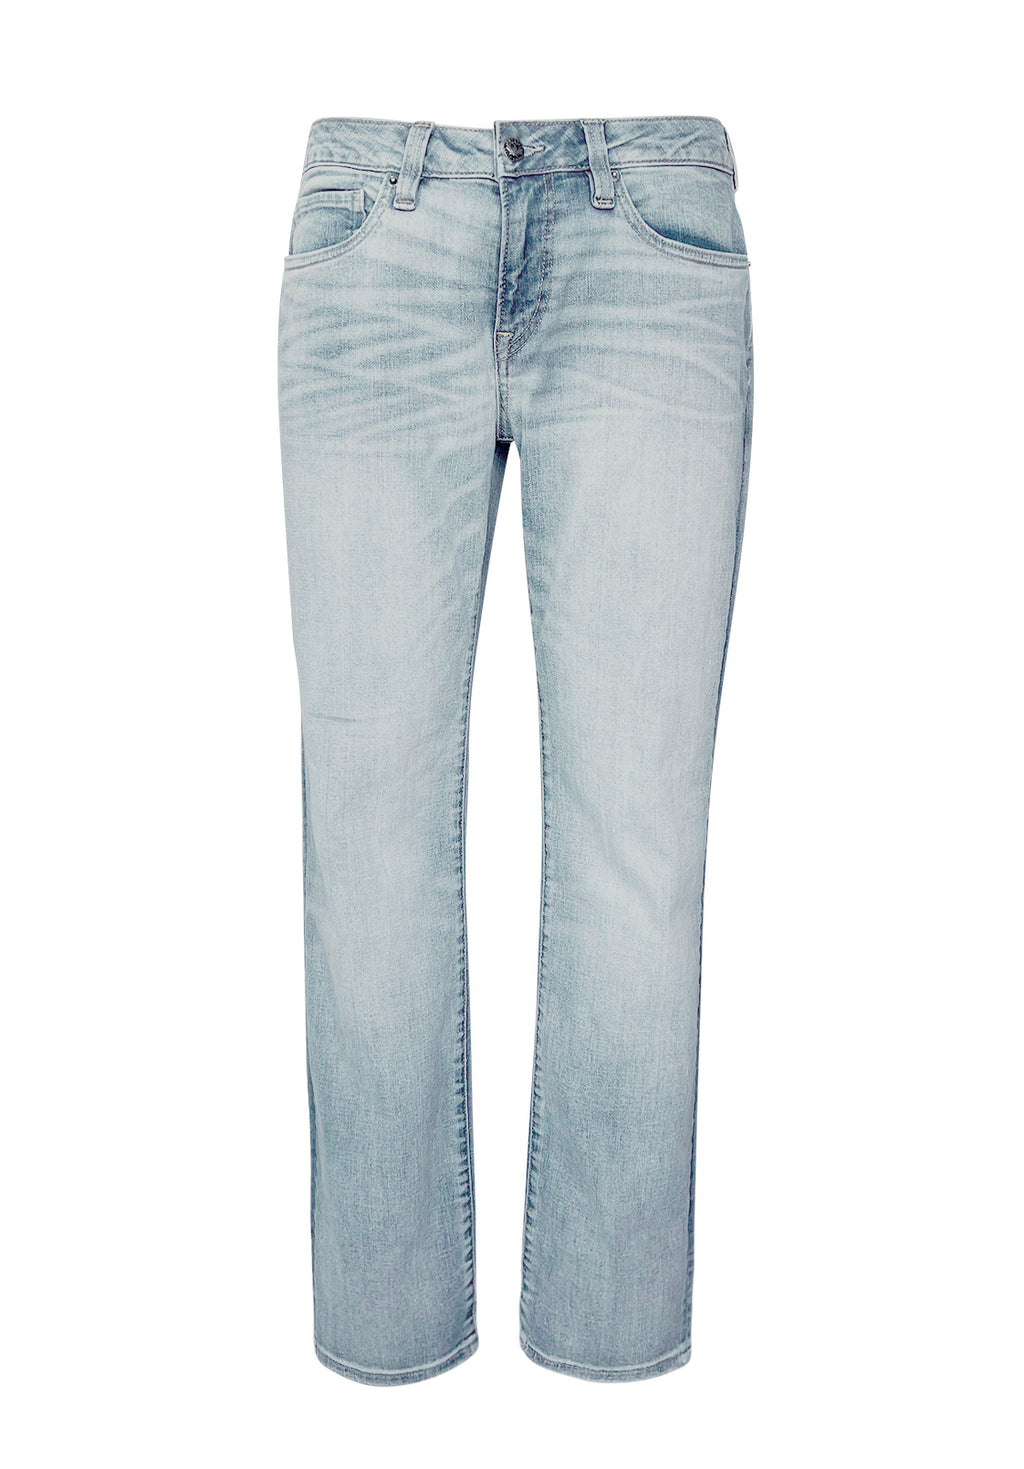 Lucky Brand Blue Denim Straight Leg Relaxed Jeans Men's Size 36x31